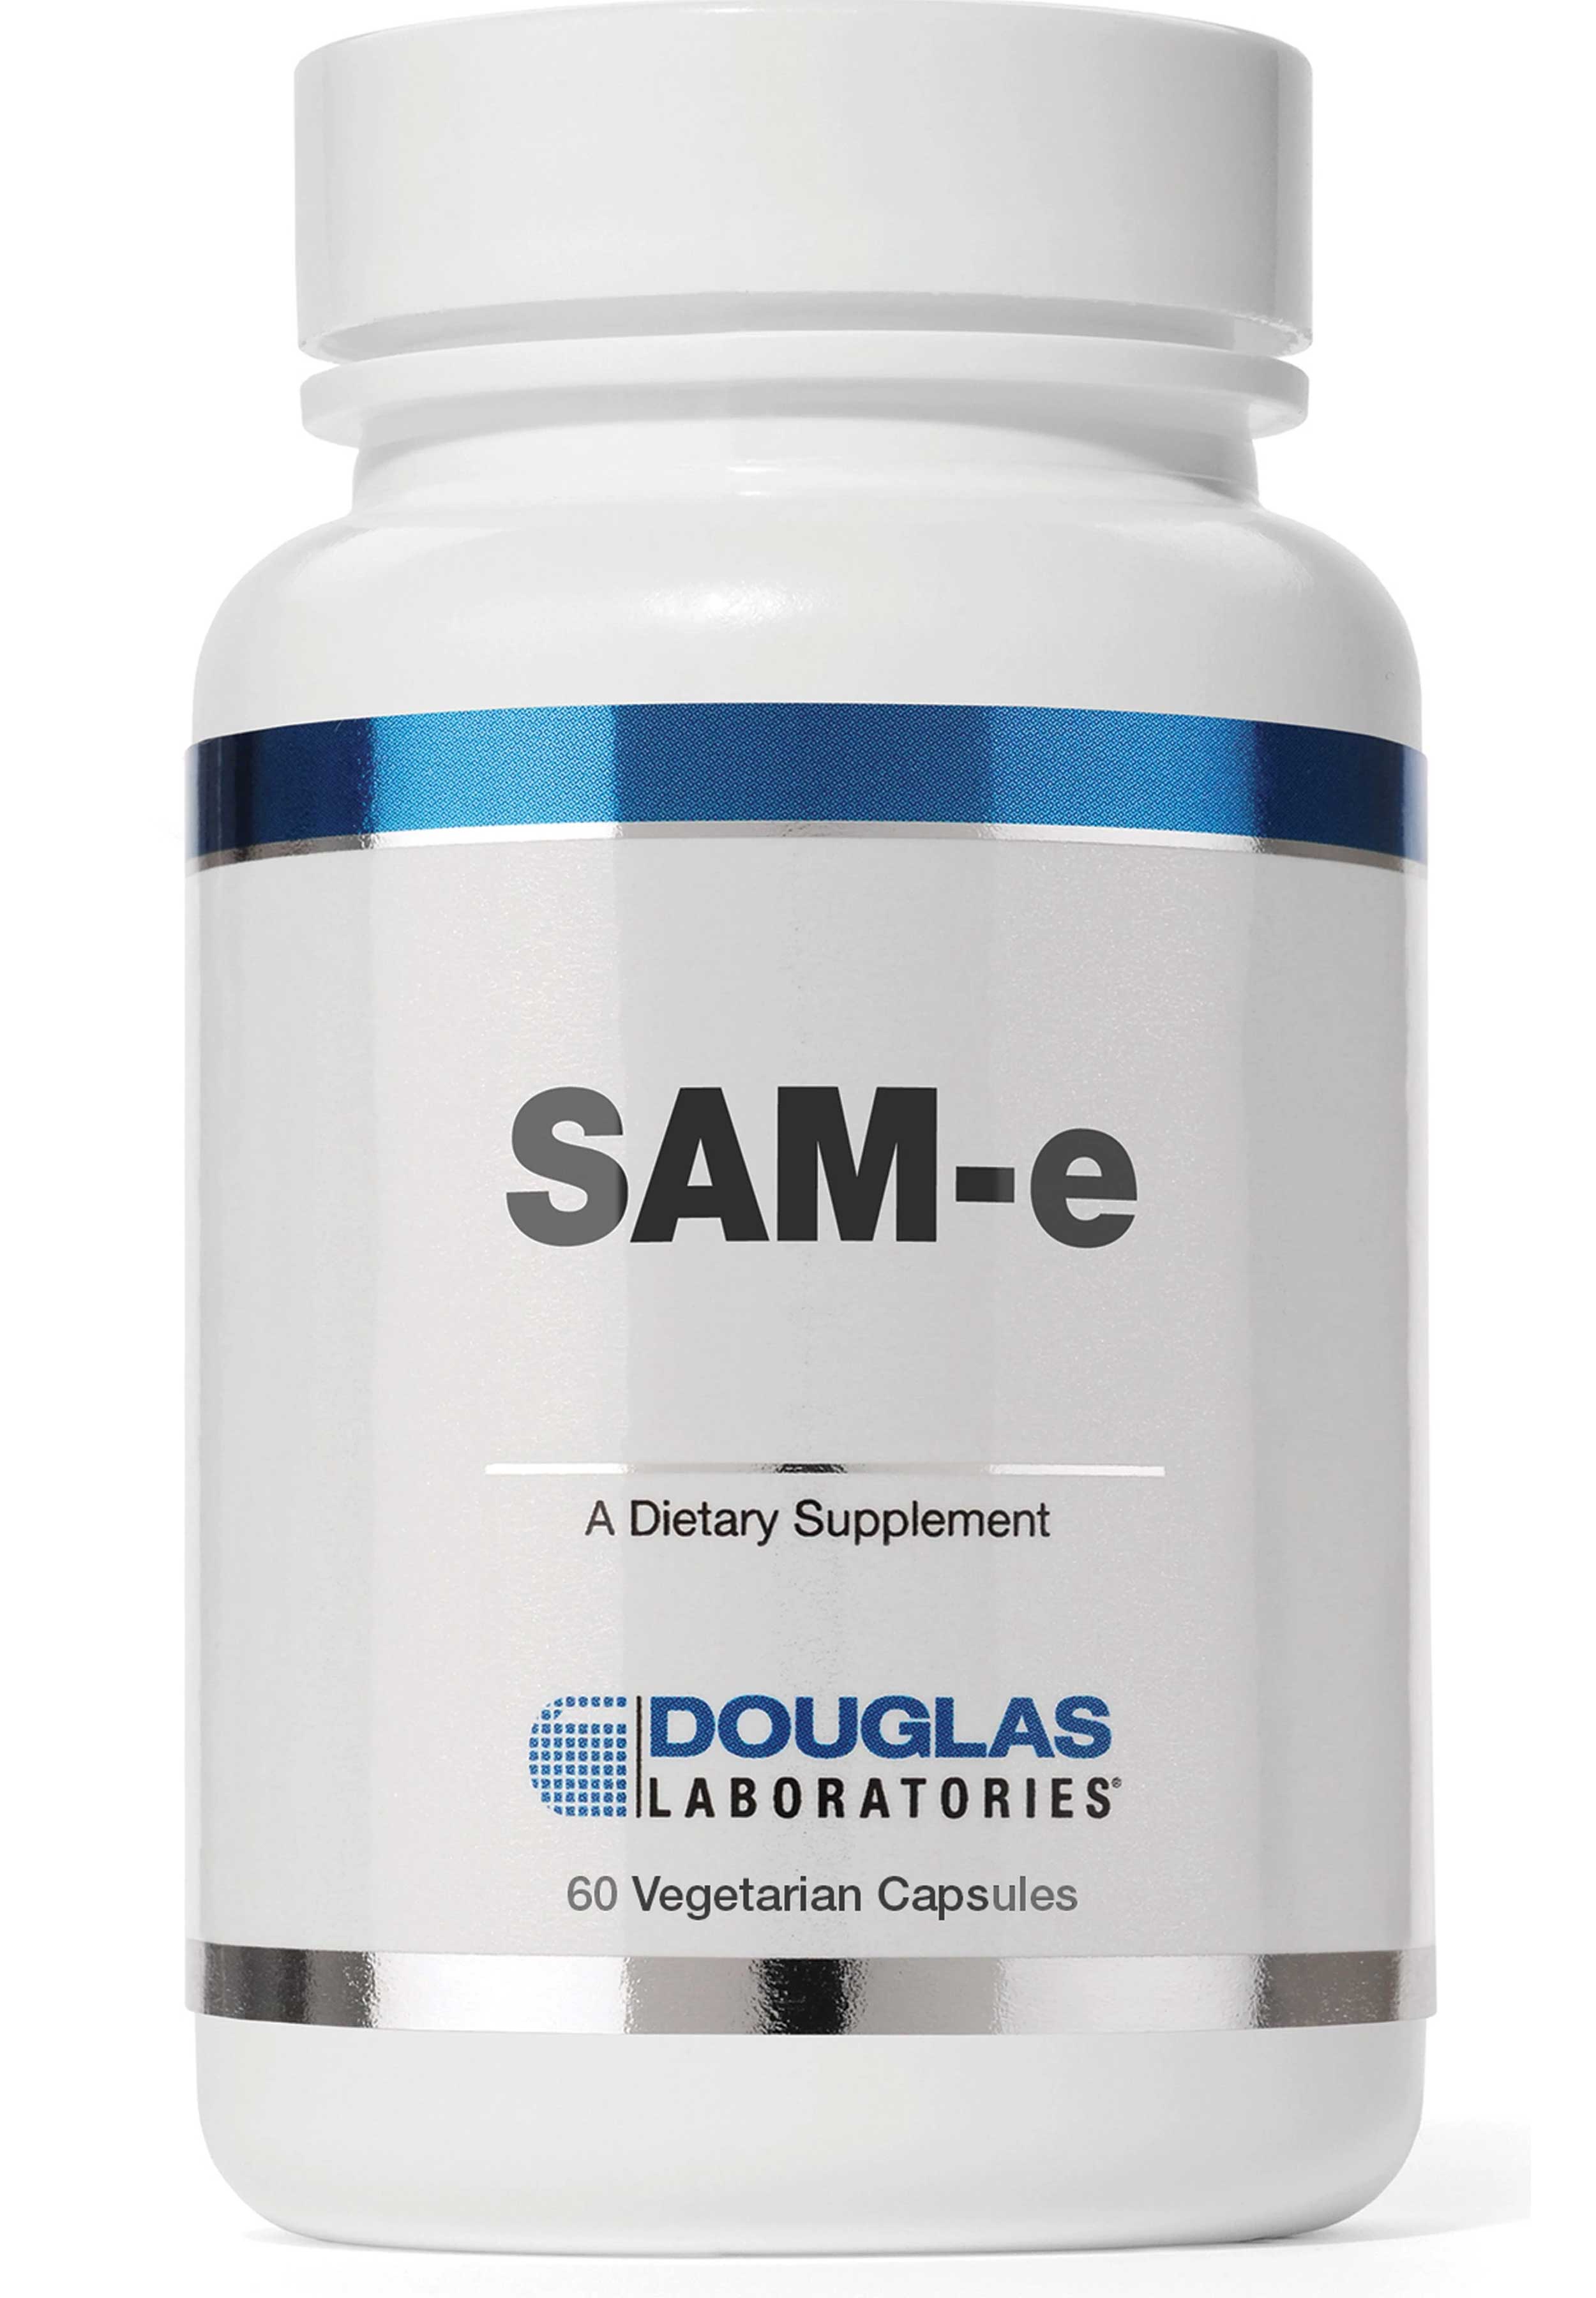 Douglas Laboratories SAM-e